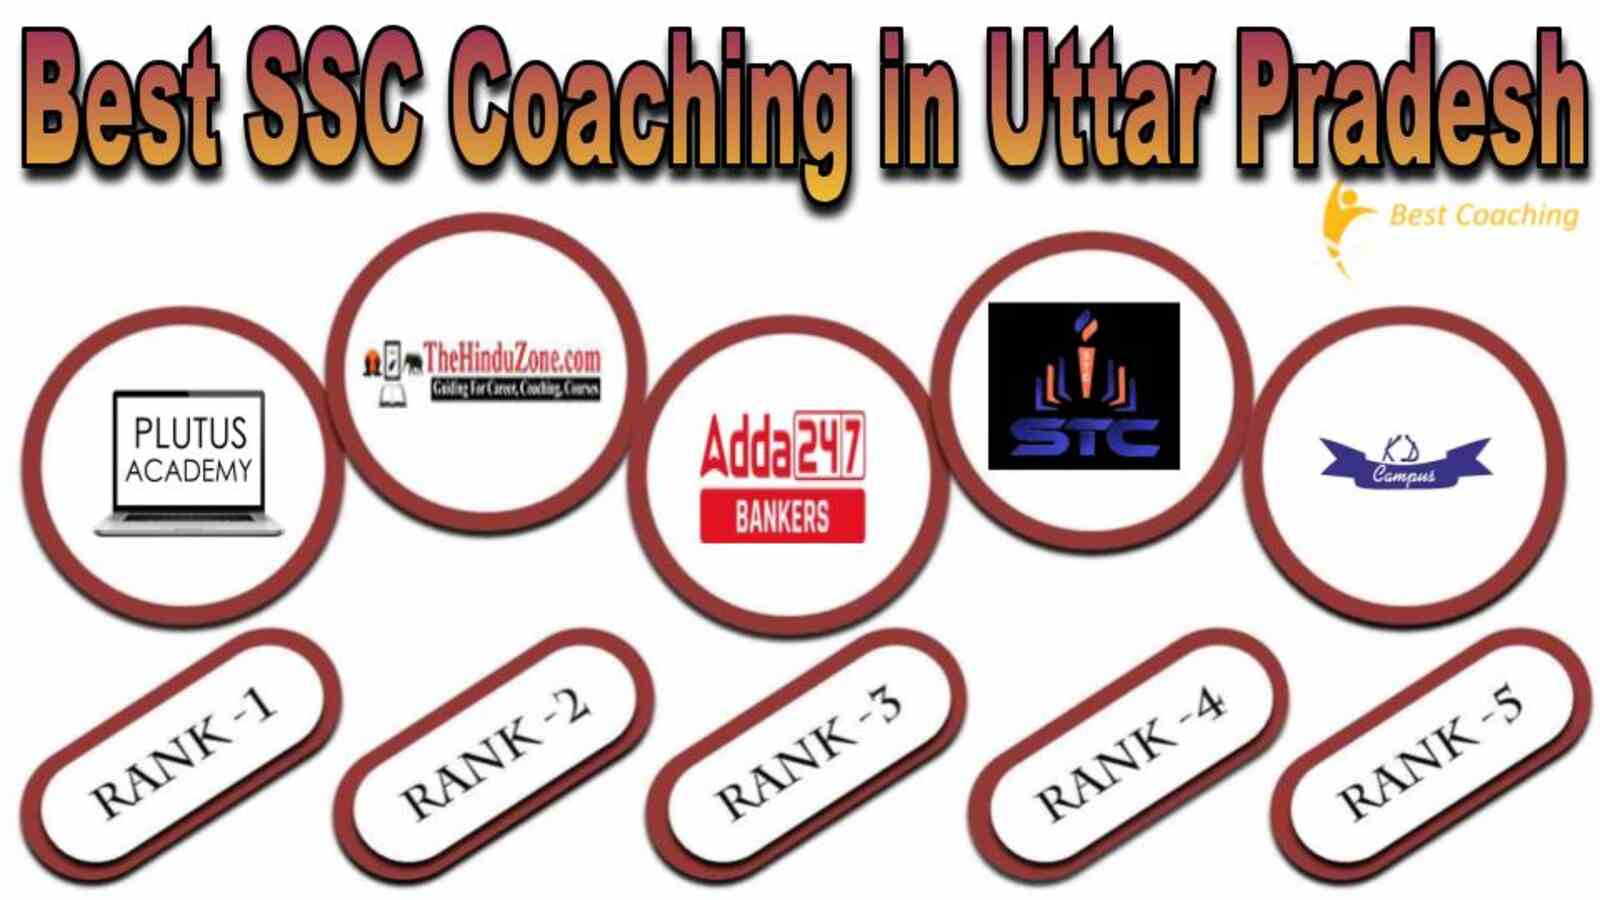 Best SSC coaching in Uttar Pradesh